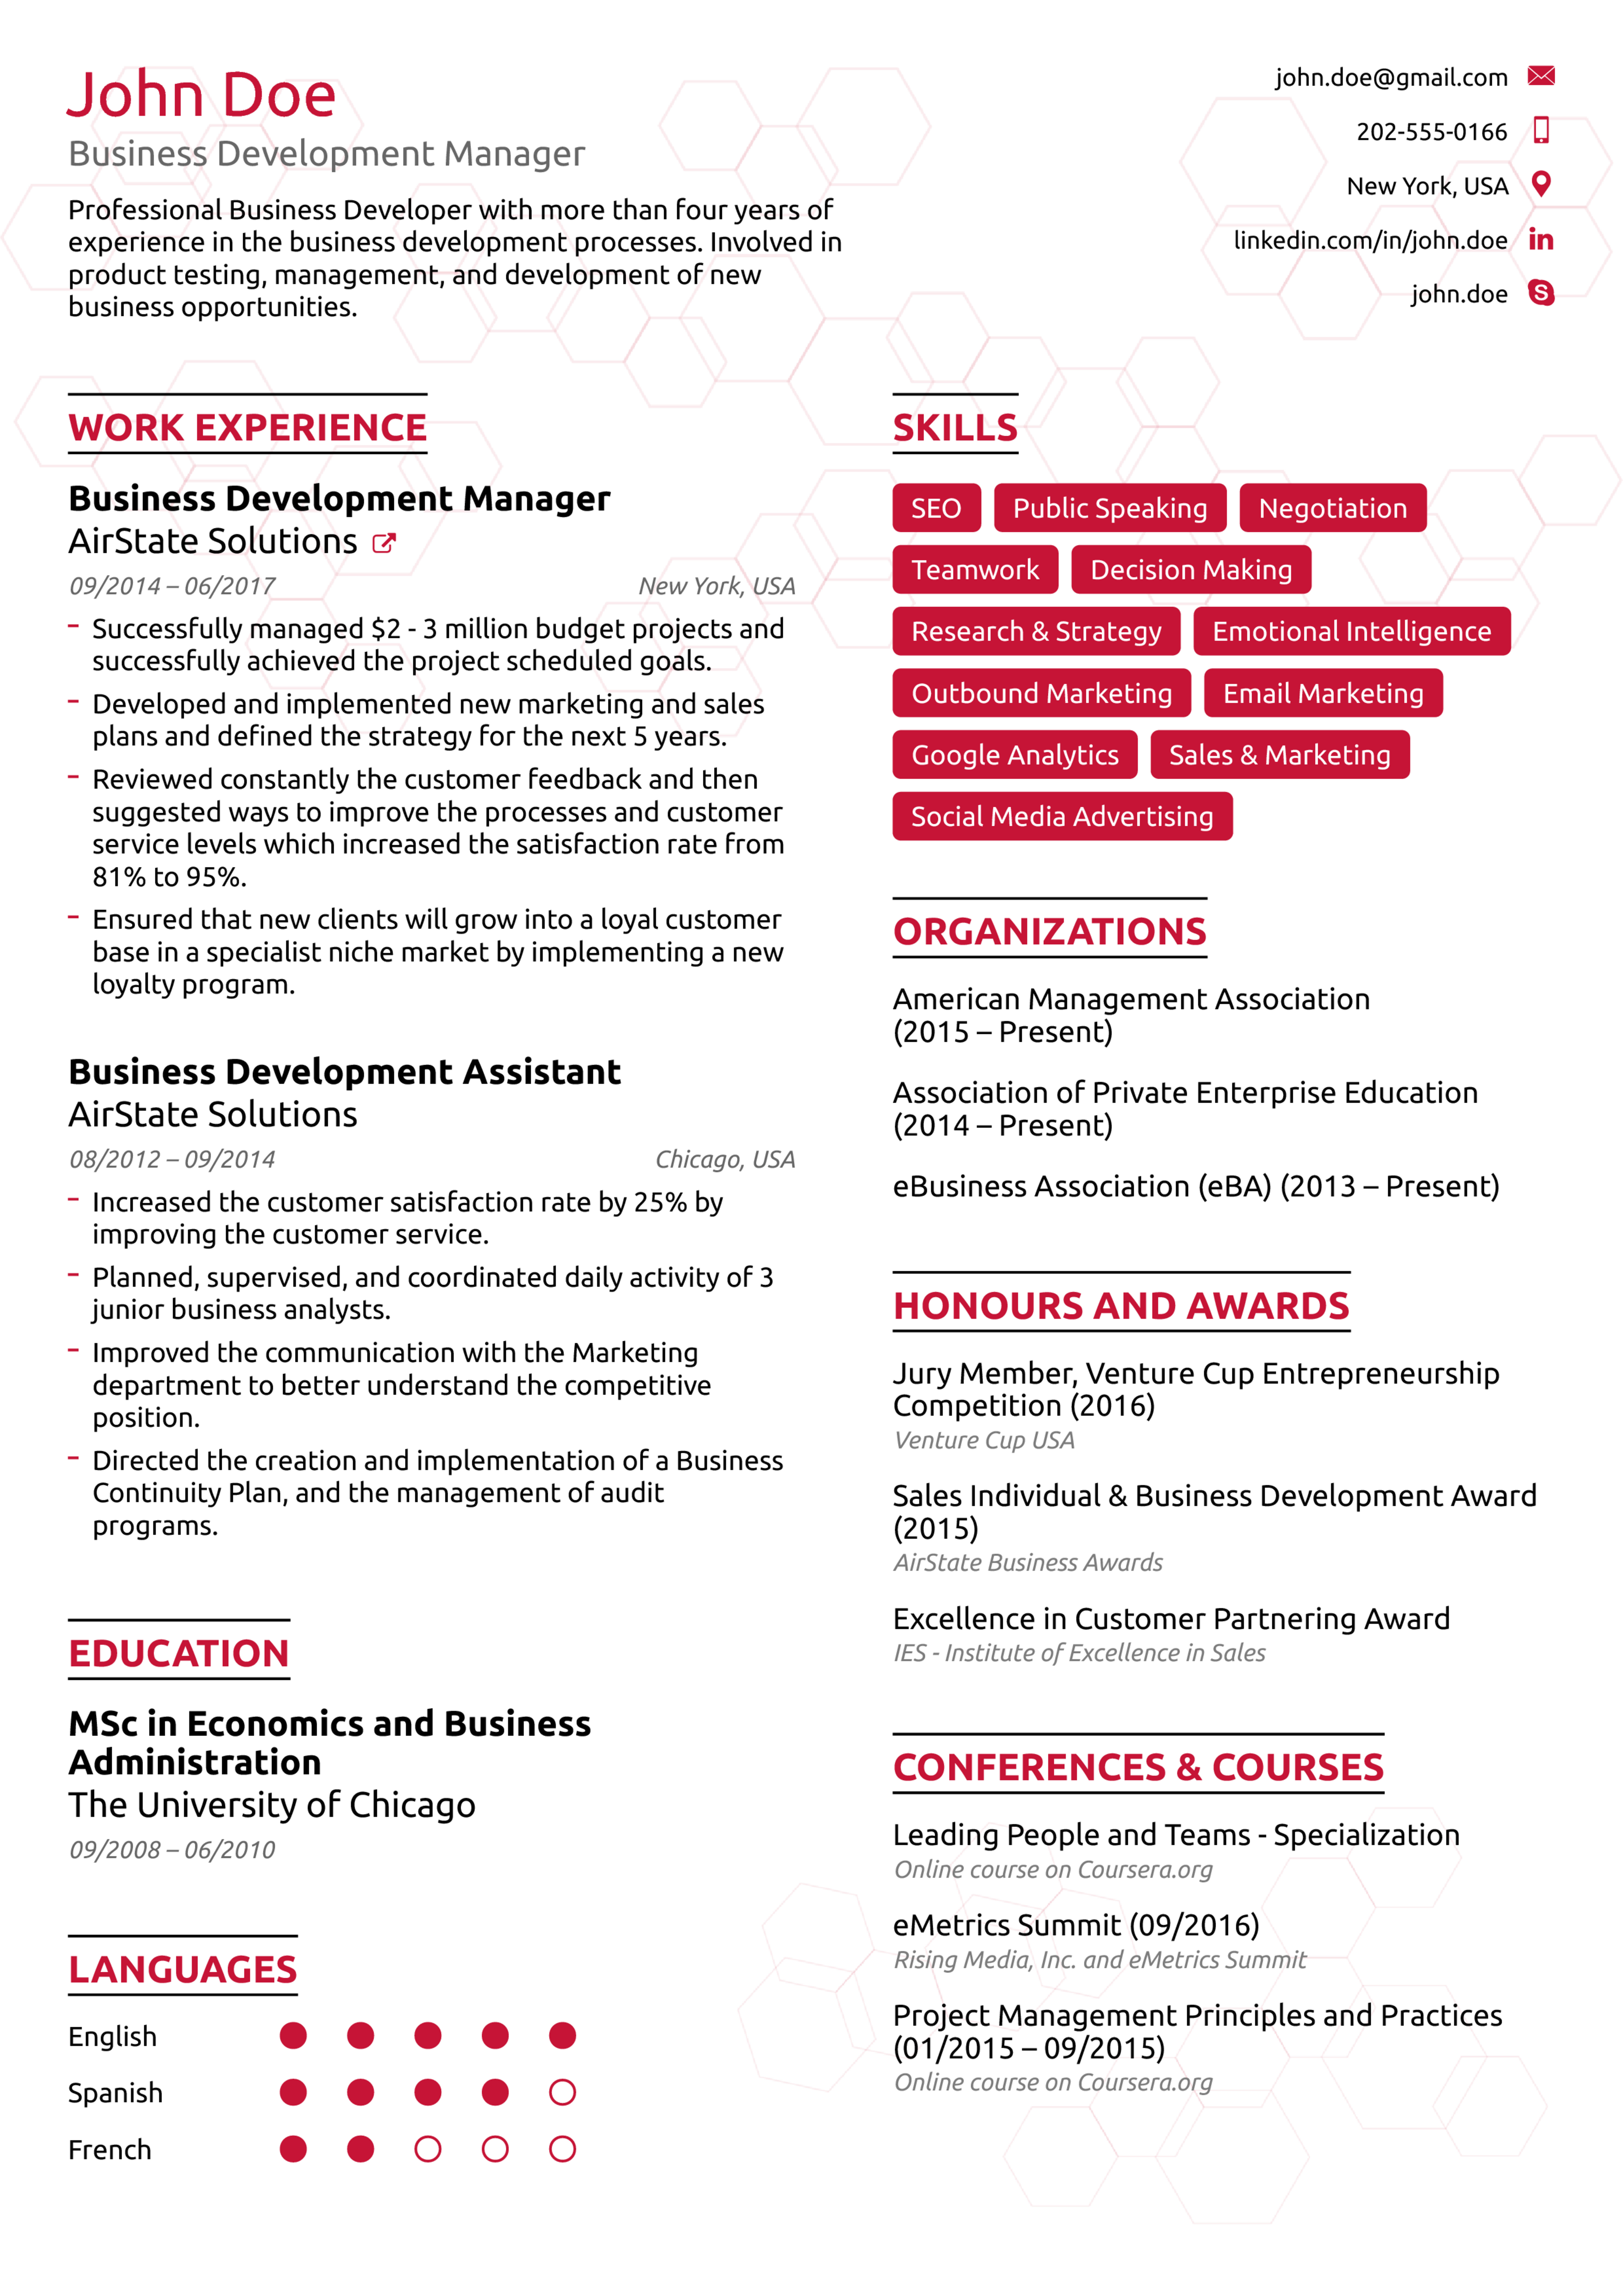 Professional Resume Examples Best Resume Example professional resume examples|wikiresume.com